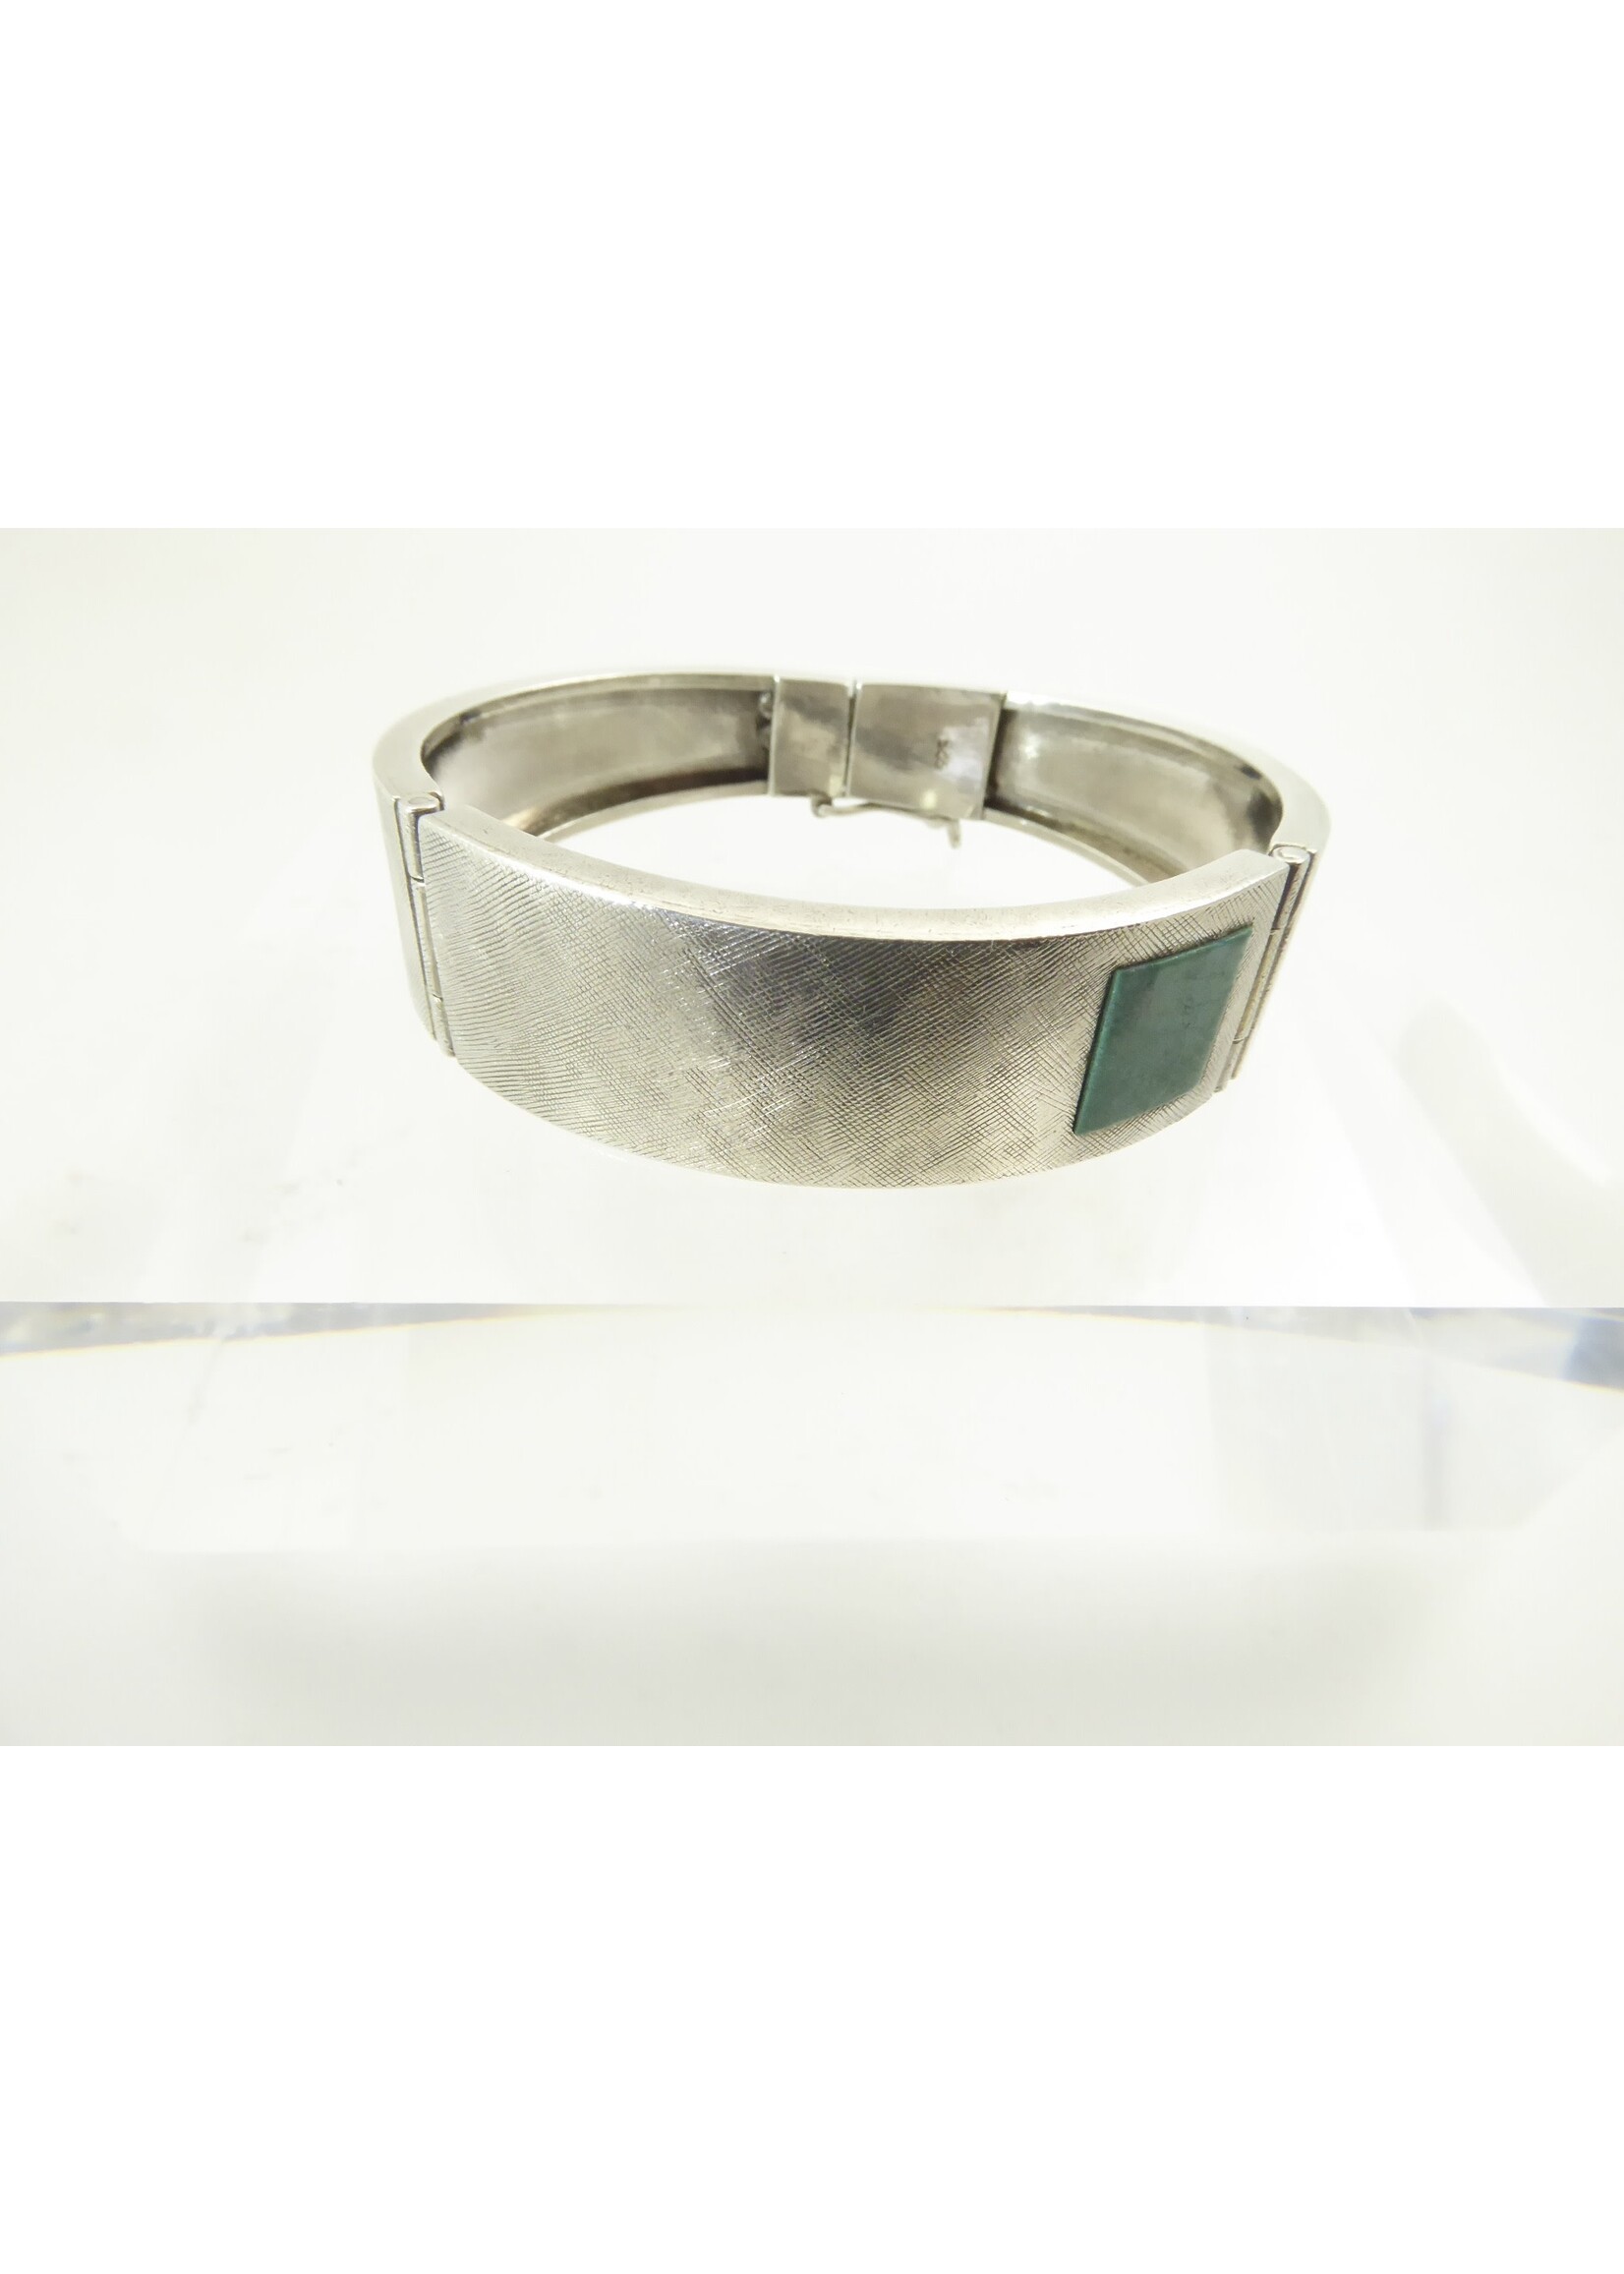 Lisa Kramer Vintage Jewelry Sterling Silver and Green Stone Modernist Bracelet